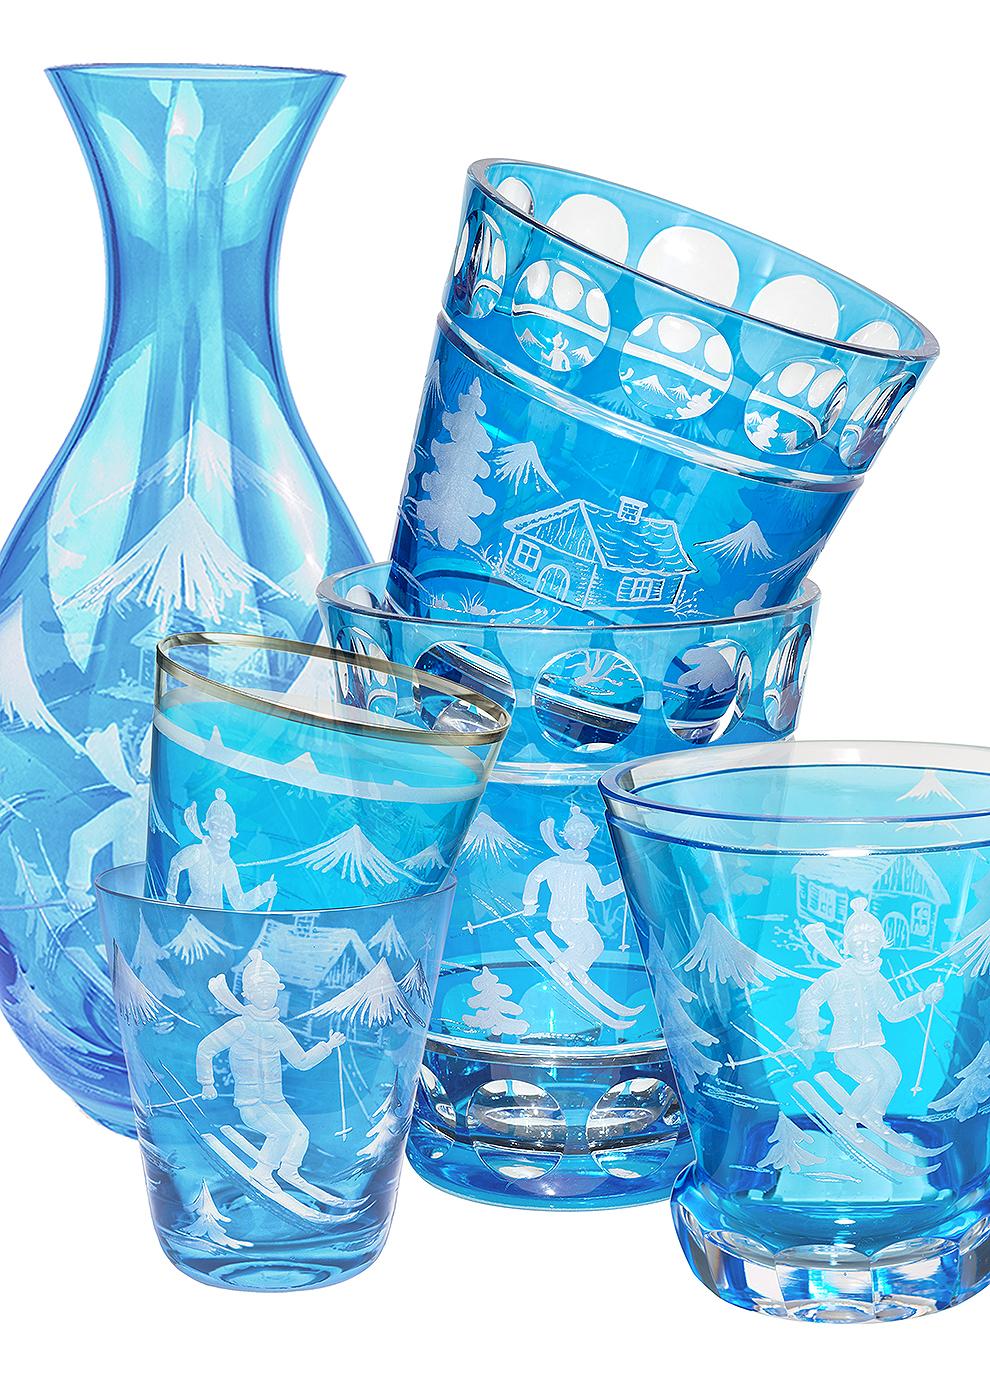 German Glass Vase Blue Crystal with Skiier Decor Sofina Boutique Kitzbuehel For Sale